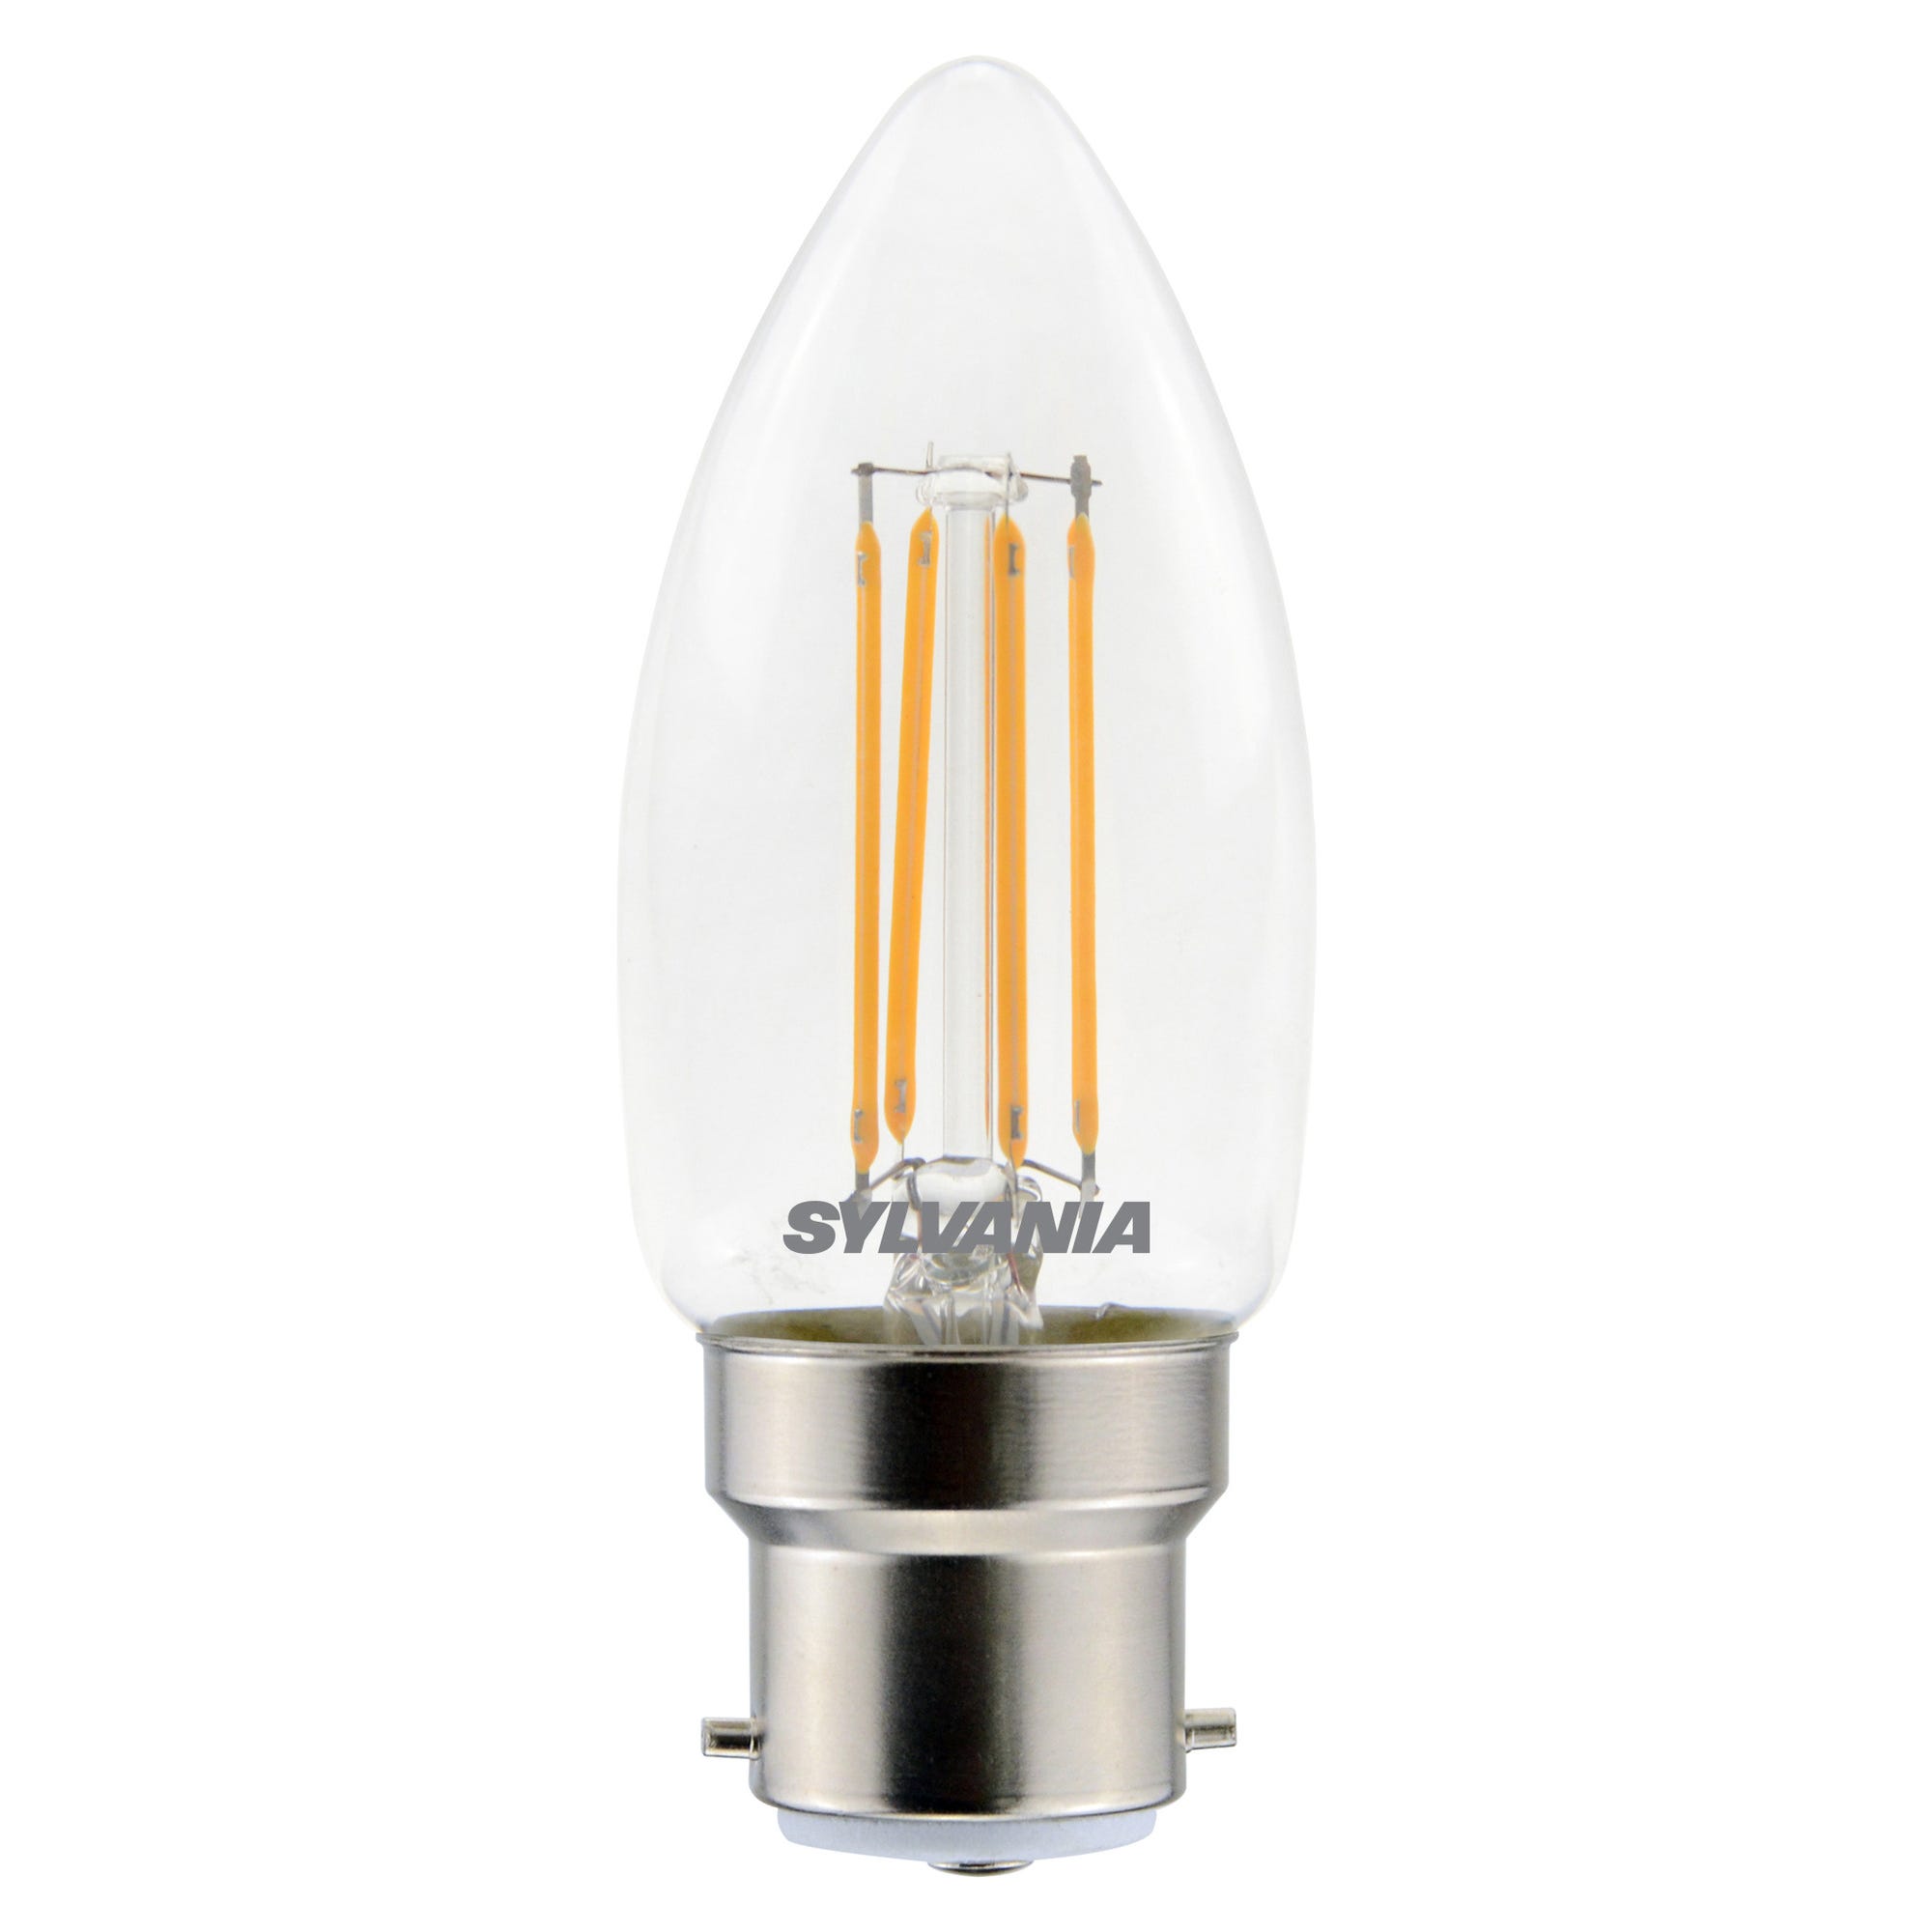 Ampoule LED B22 2700K TOLEDO - SYLVANIA 0